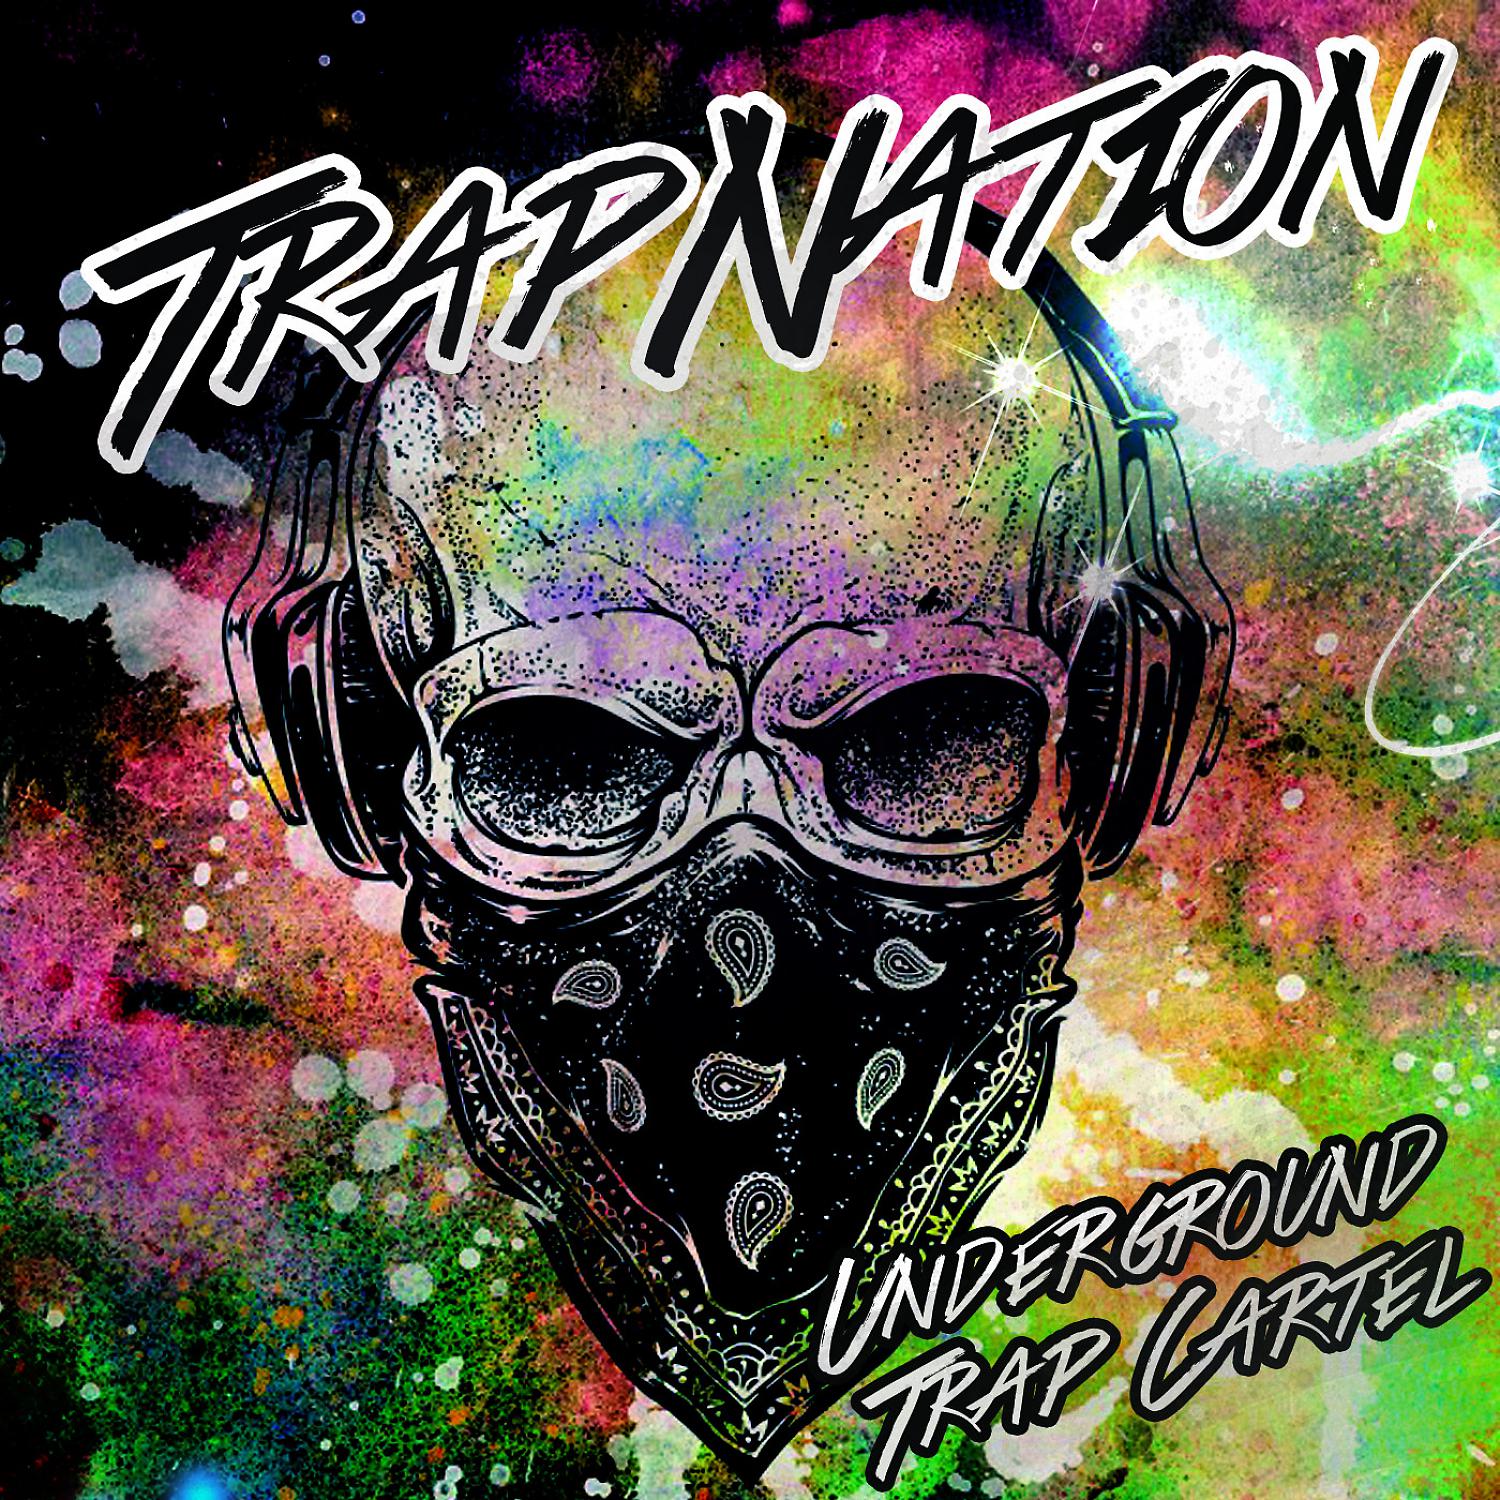 Постер альбома Underground Trap Cartel